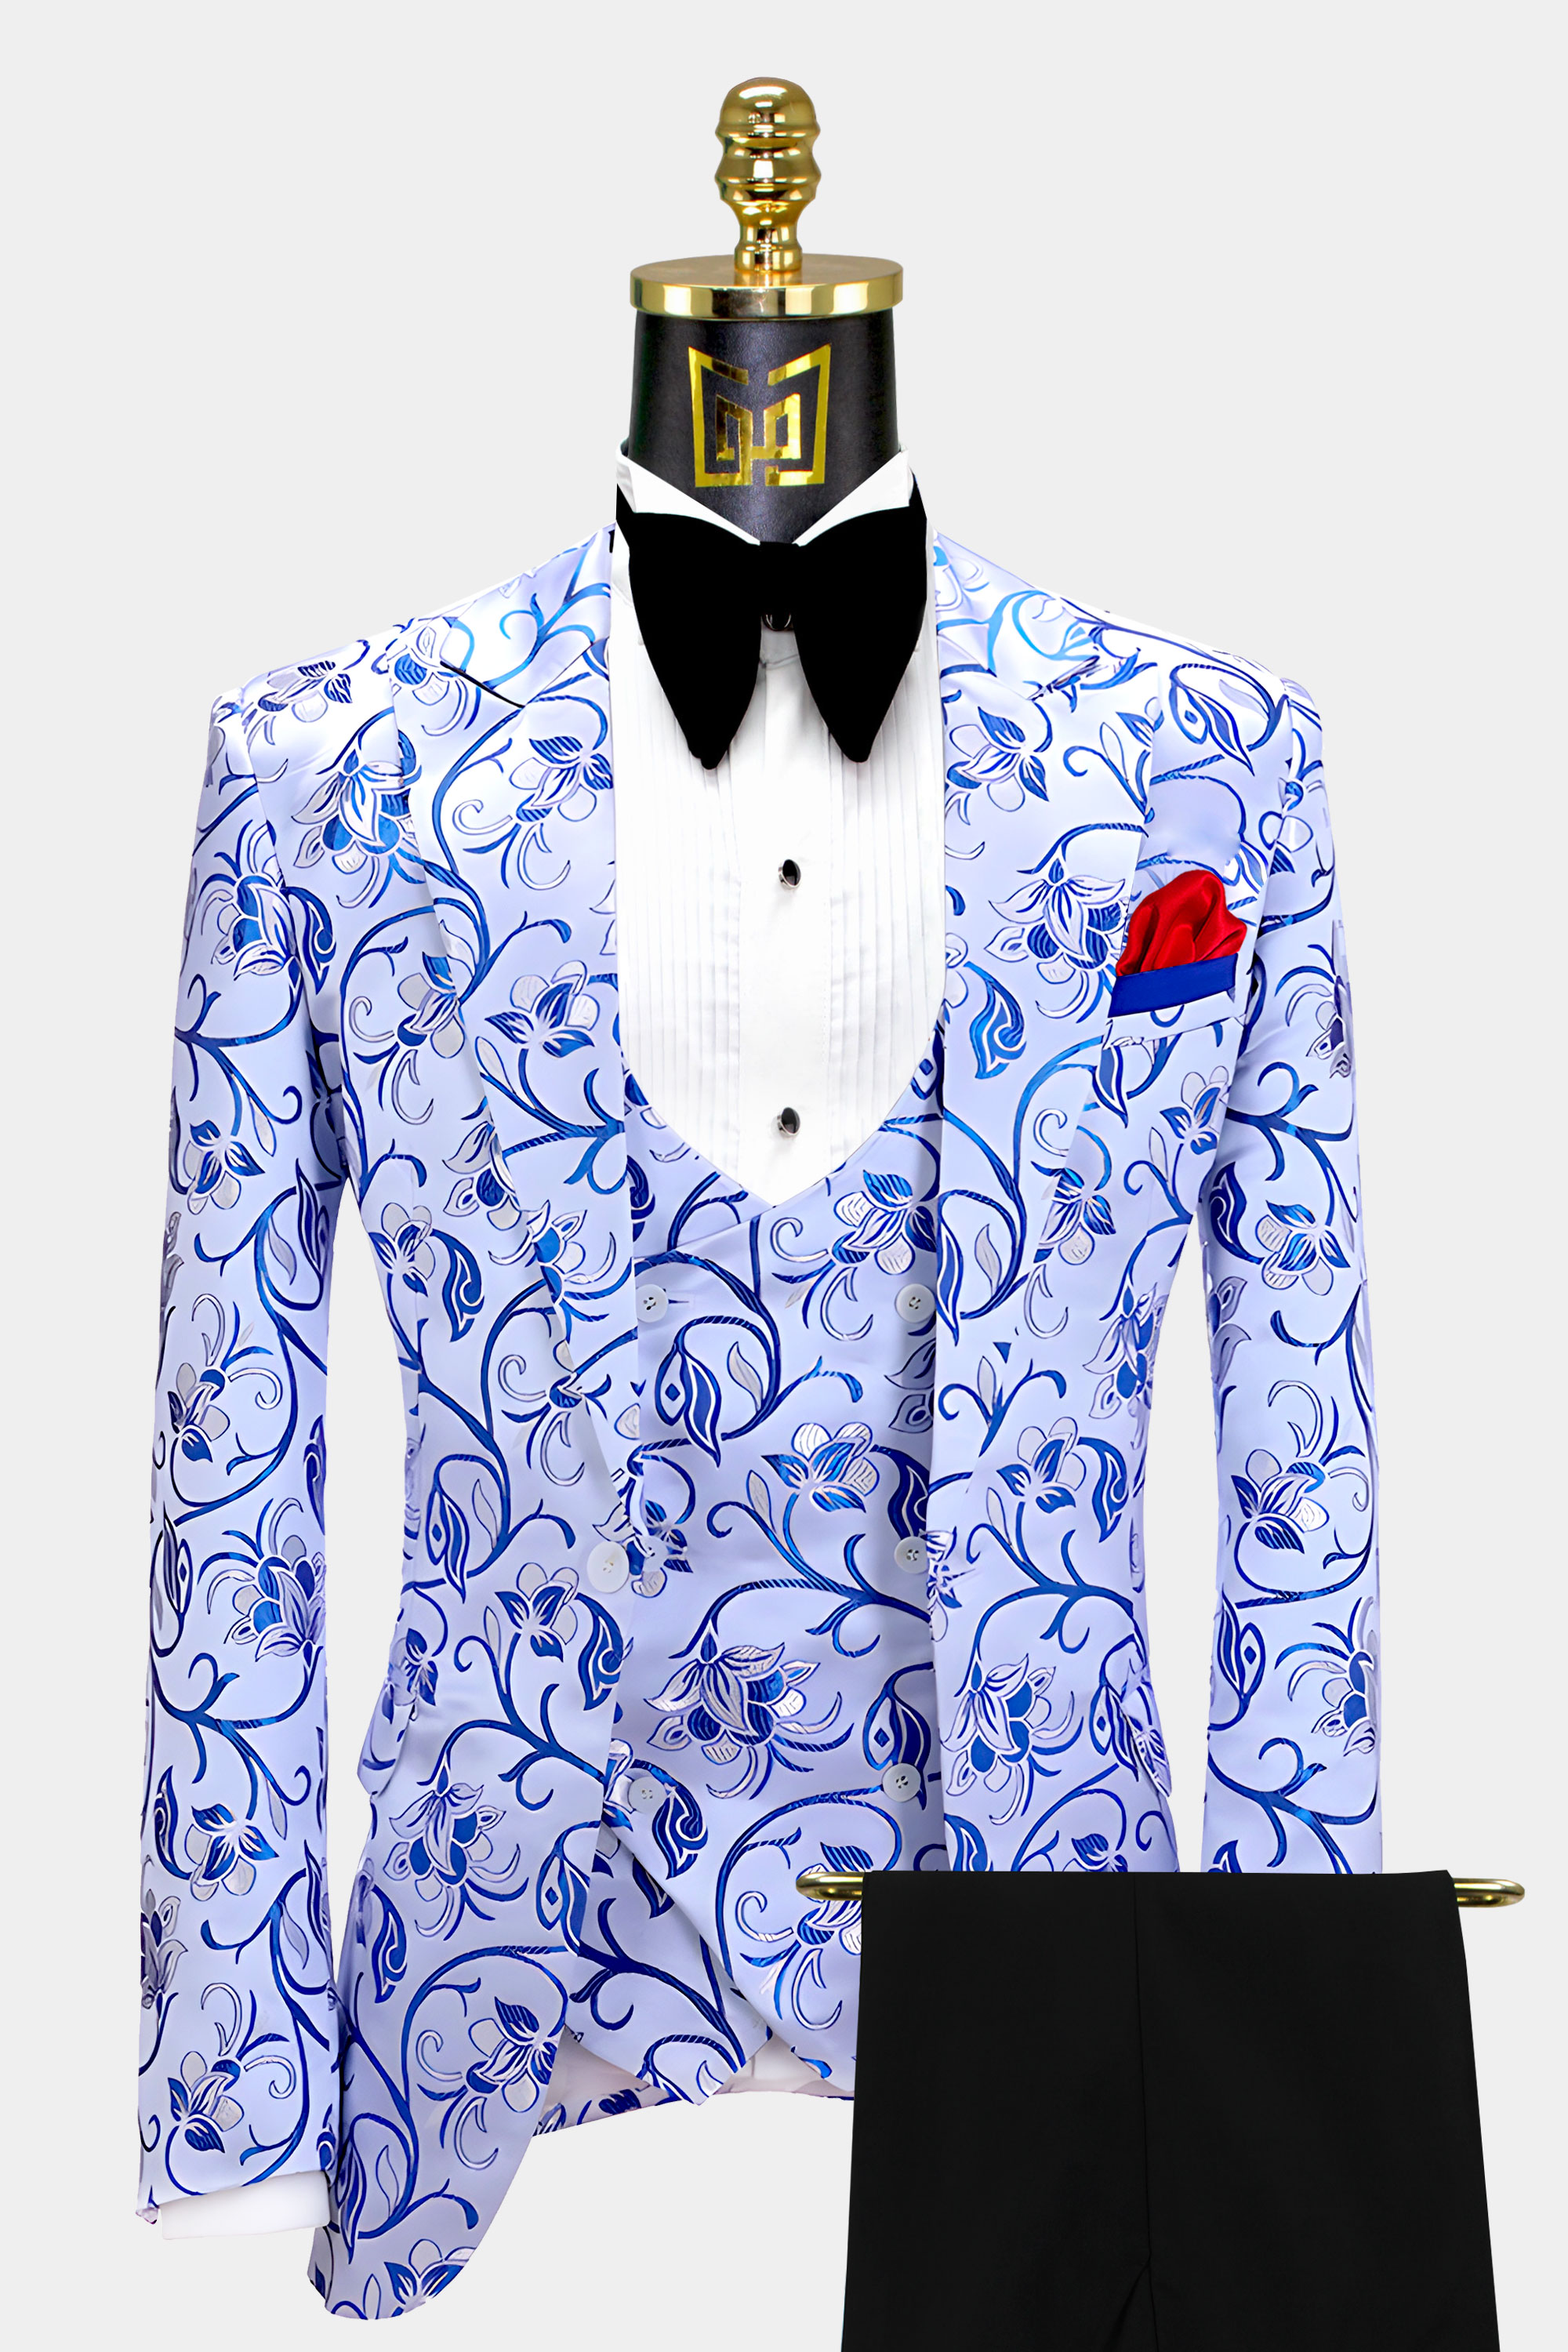 Blue-and-Silver-Suit-from-Gentlemansguru.com